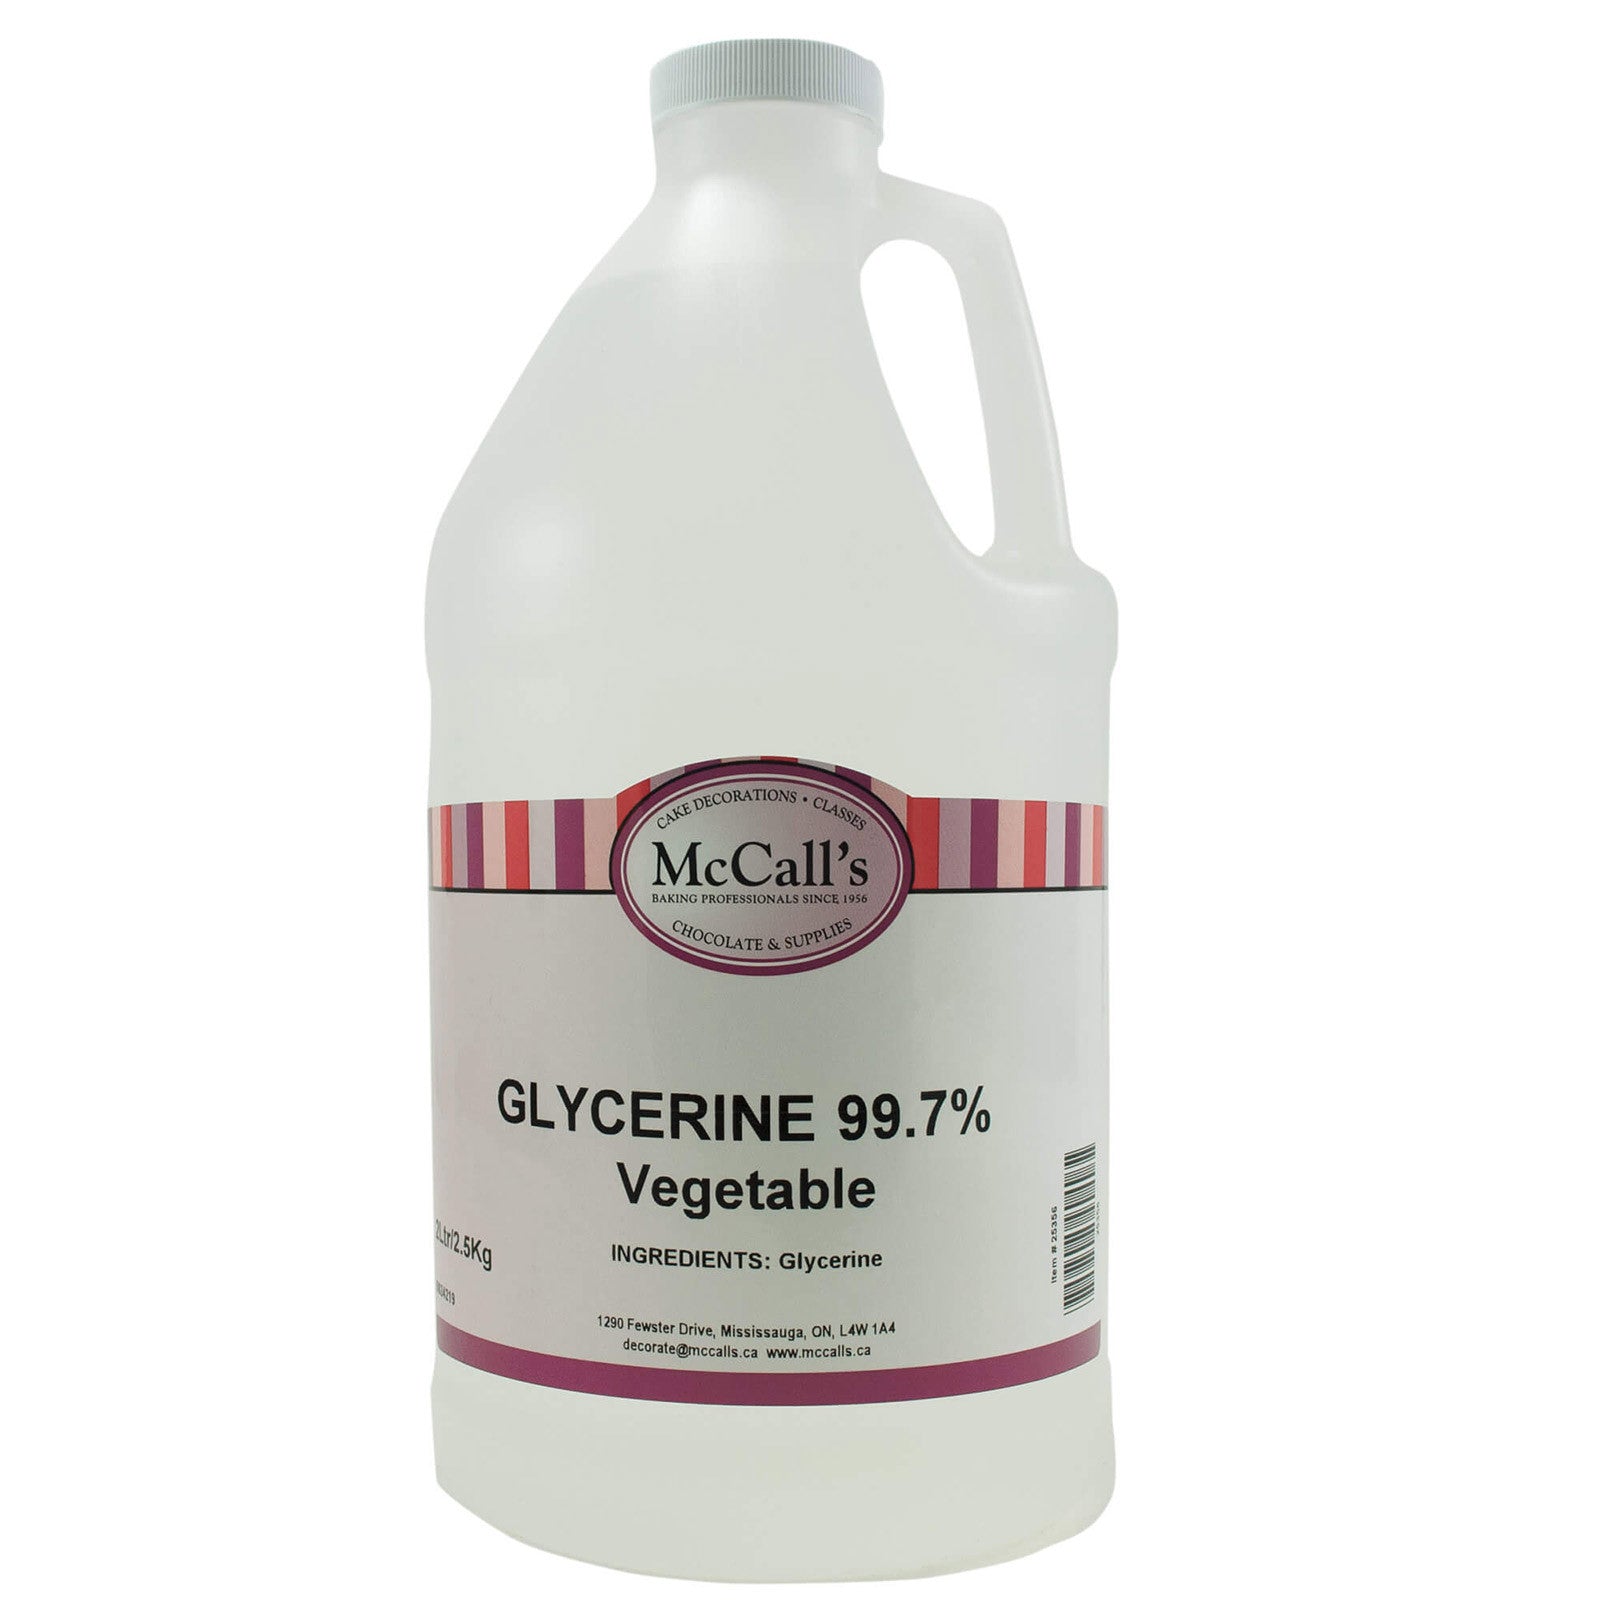 McCall's Glycerine 99.7% Vegetable